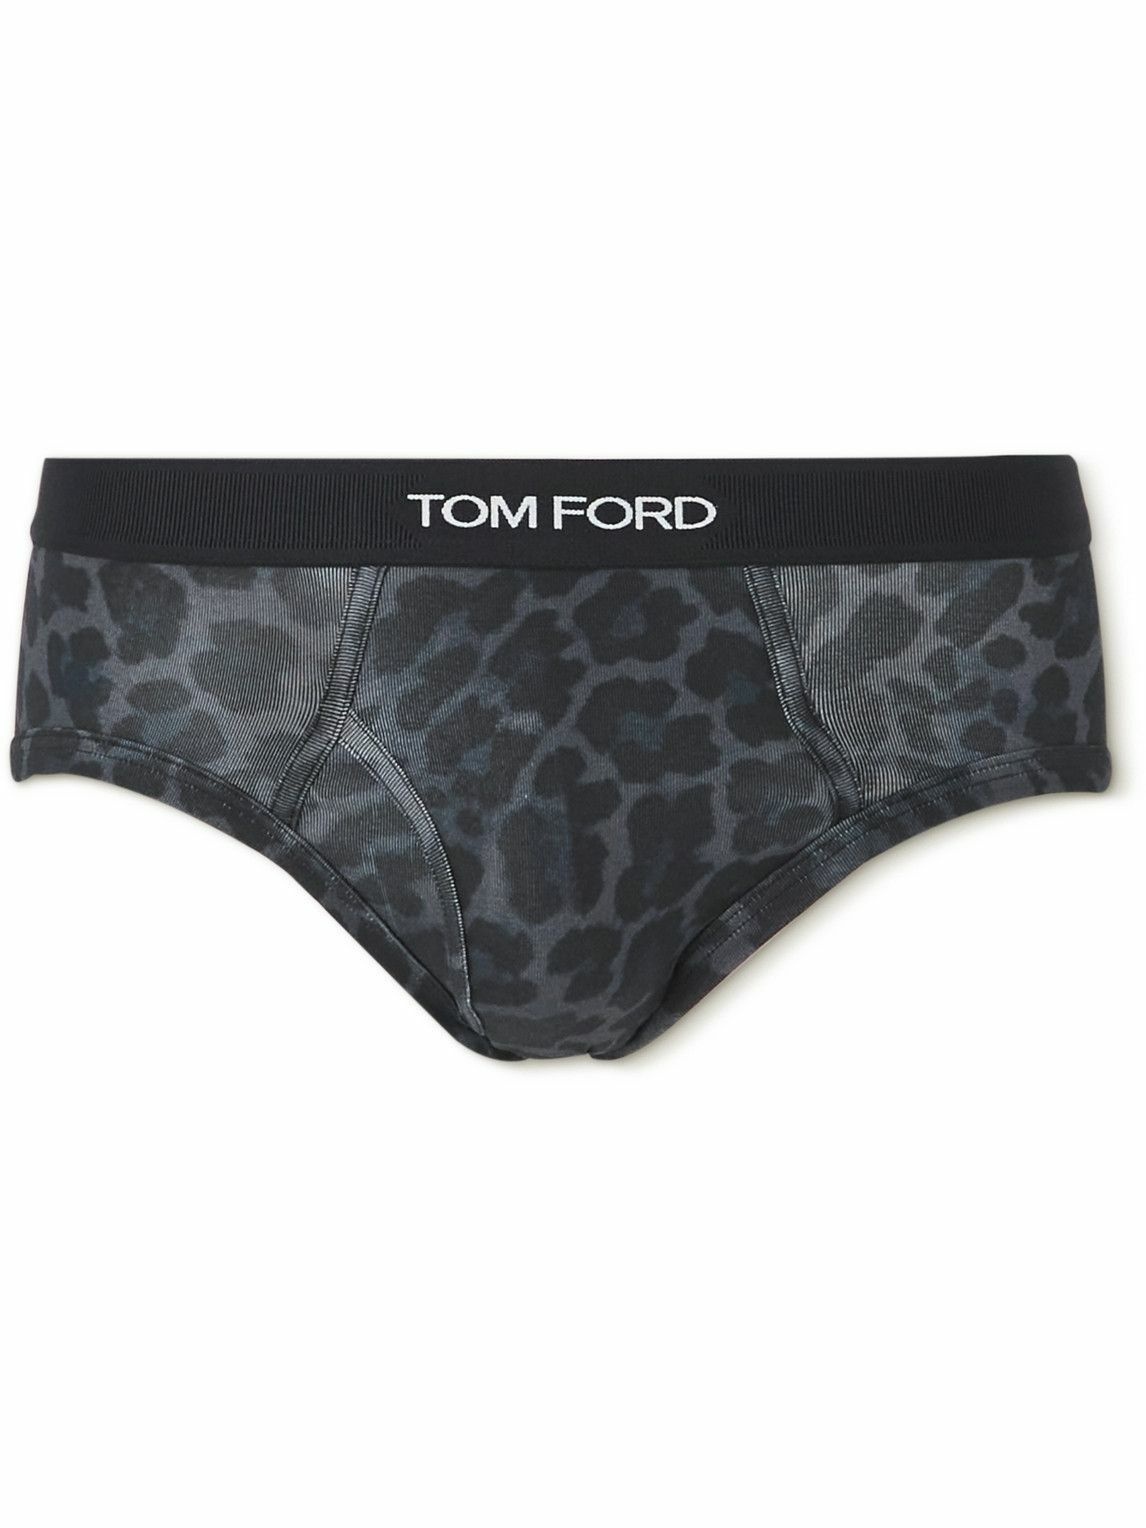 TOM FORD - Leopard-Print Stretch-Cotton Briefs - Gray TOM FORD